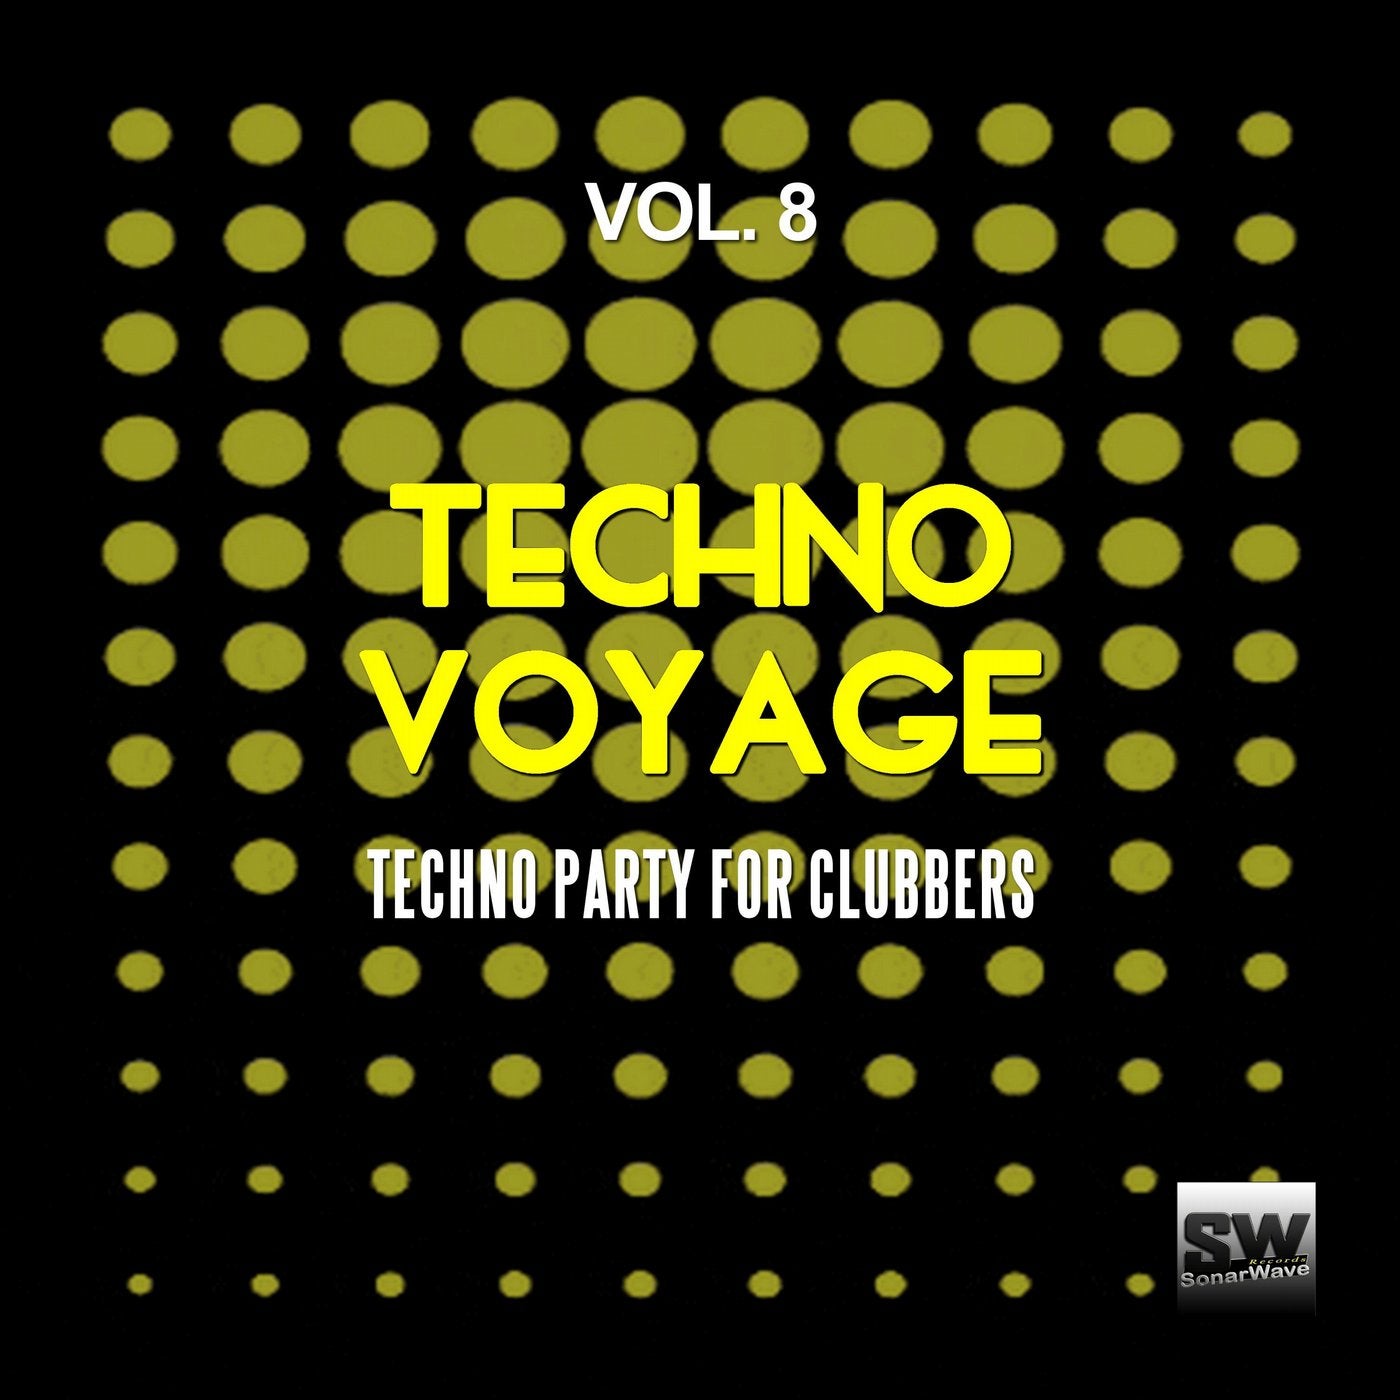 Techno Voyage, Vol. 8 (Techno Party For Clubbers)